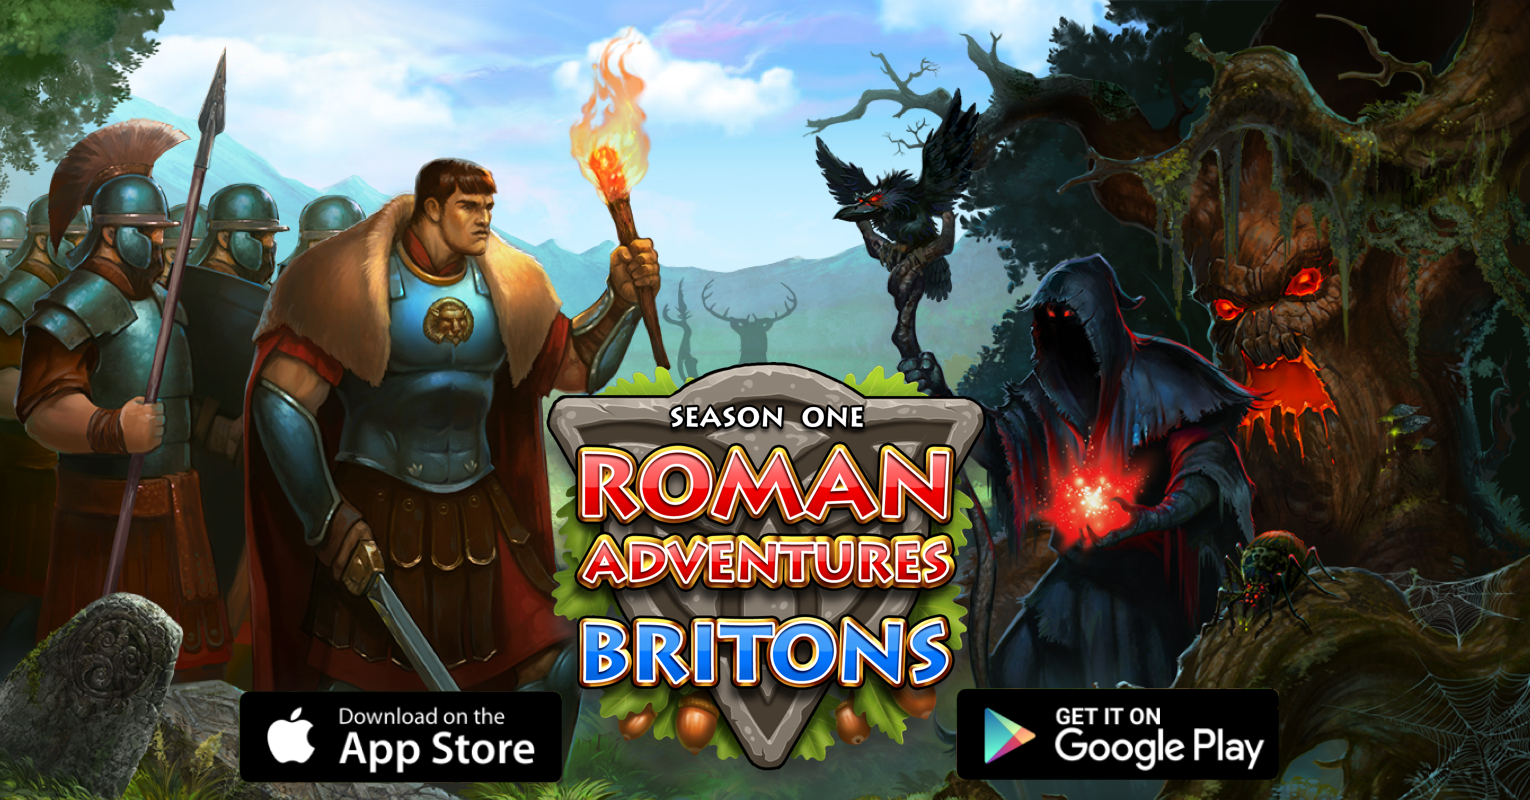 Roman Adventures: Britons Season 1 теперь доступна для iOS и Android!